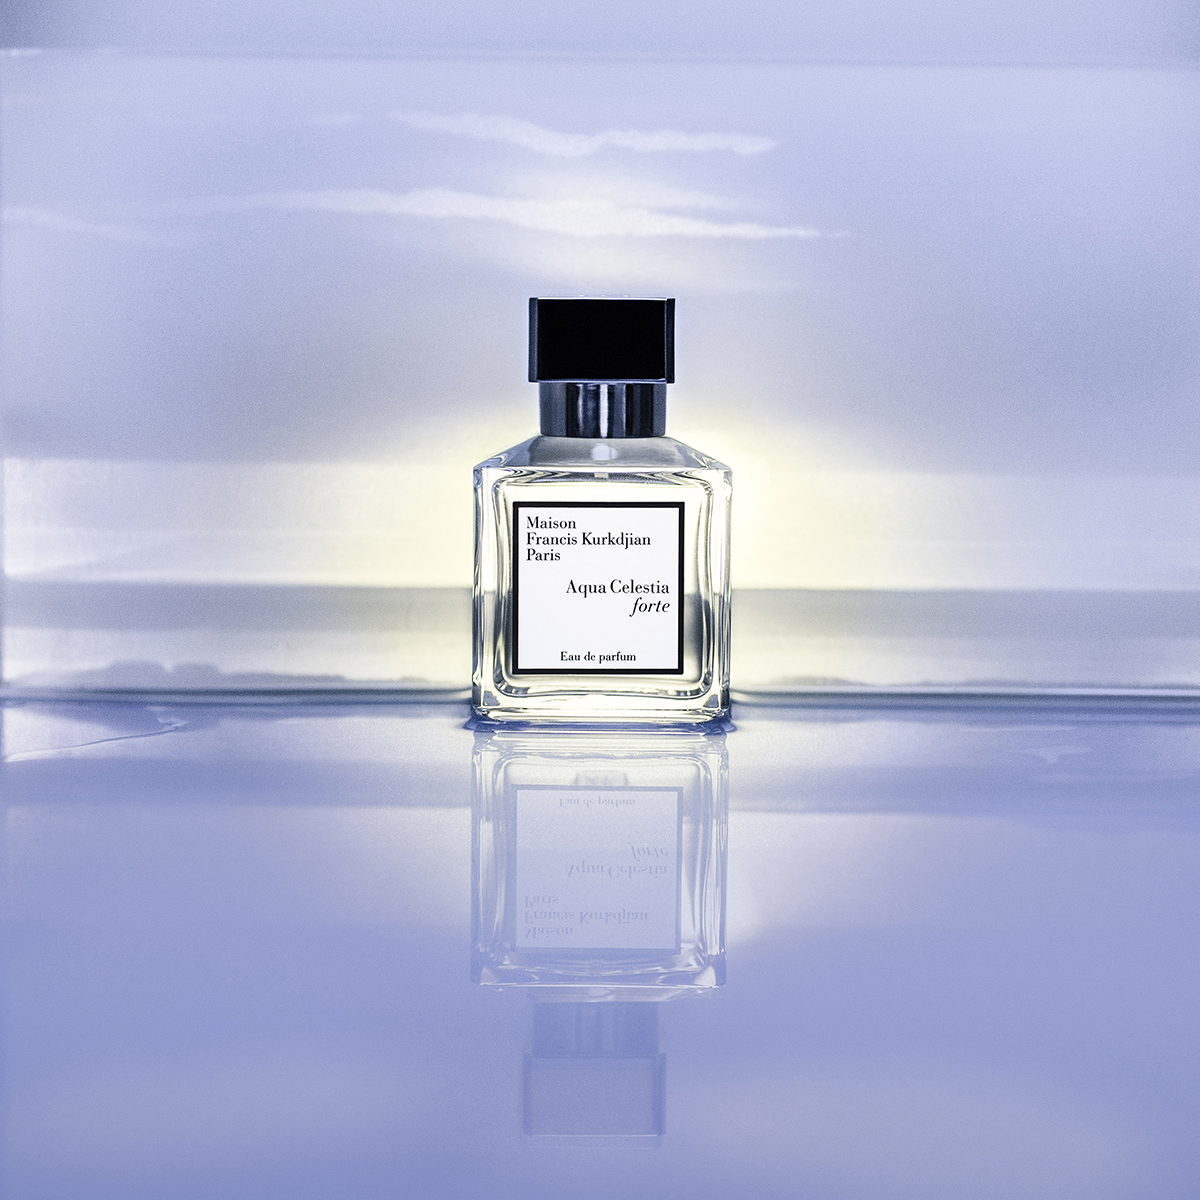 Maison Francis Kurkdjian - Aqua Celestia forte Eau de Parfum